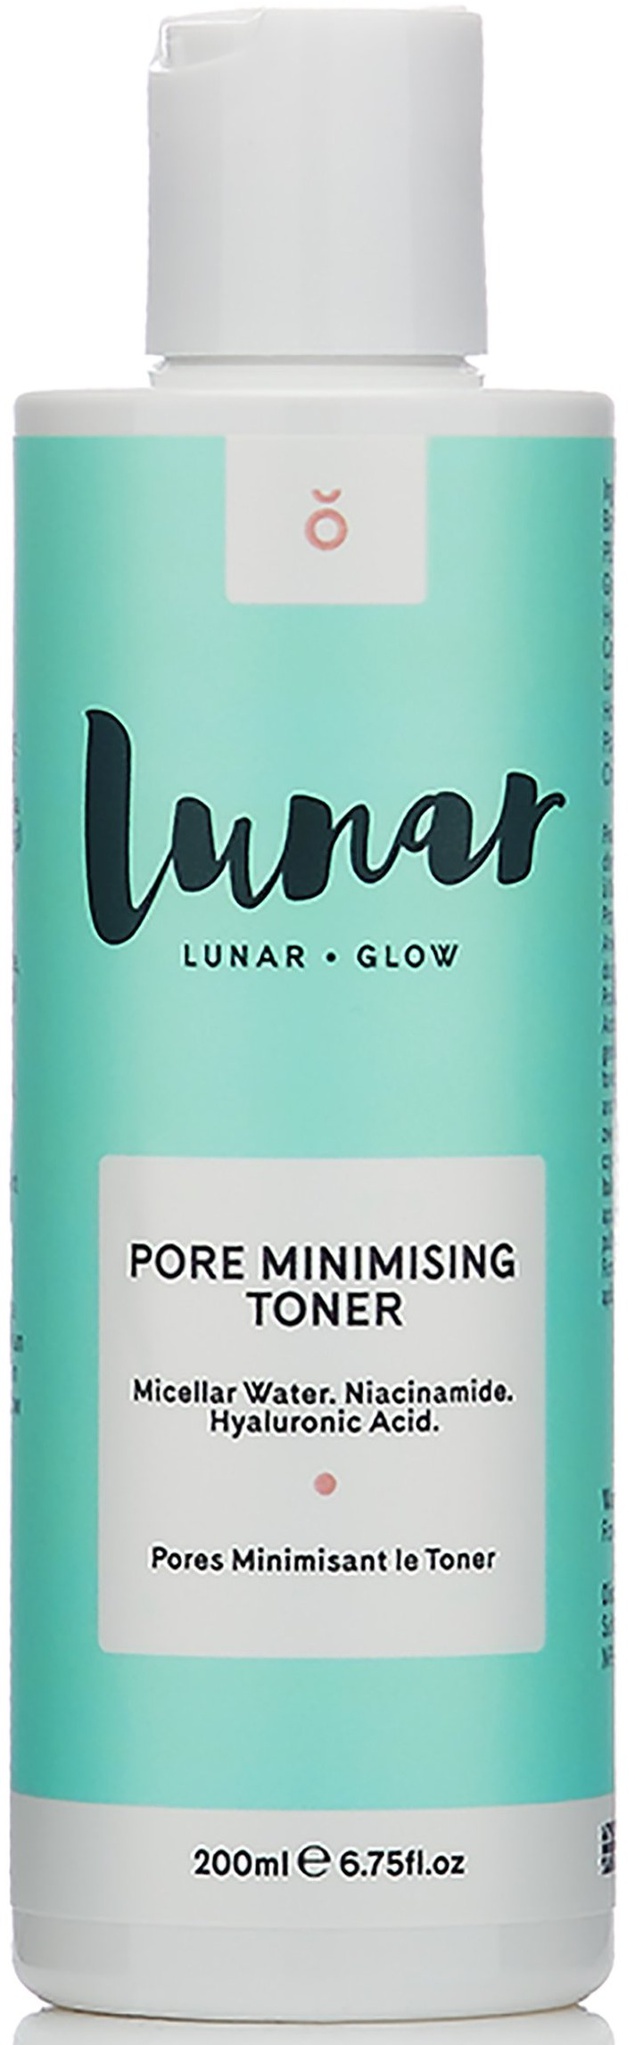 Lunar Glow Pore Minimising Toner